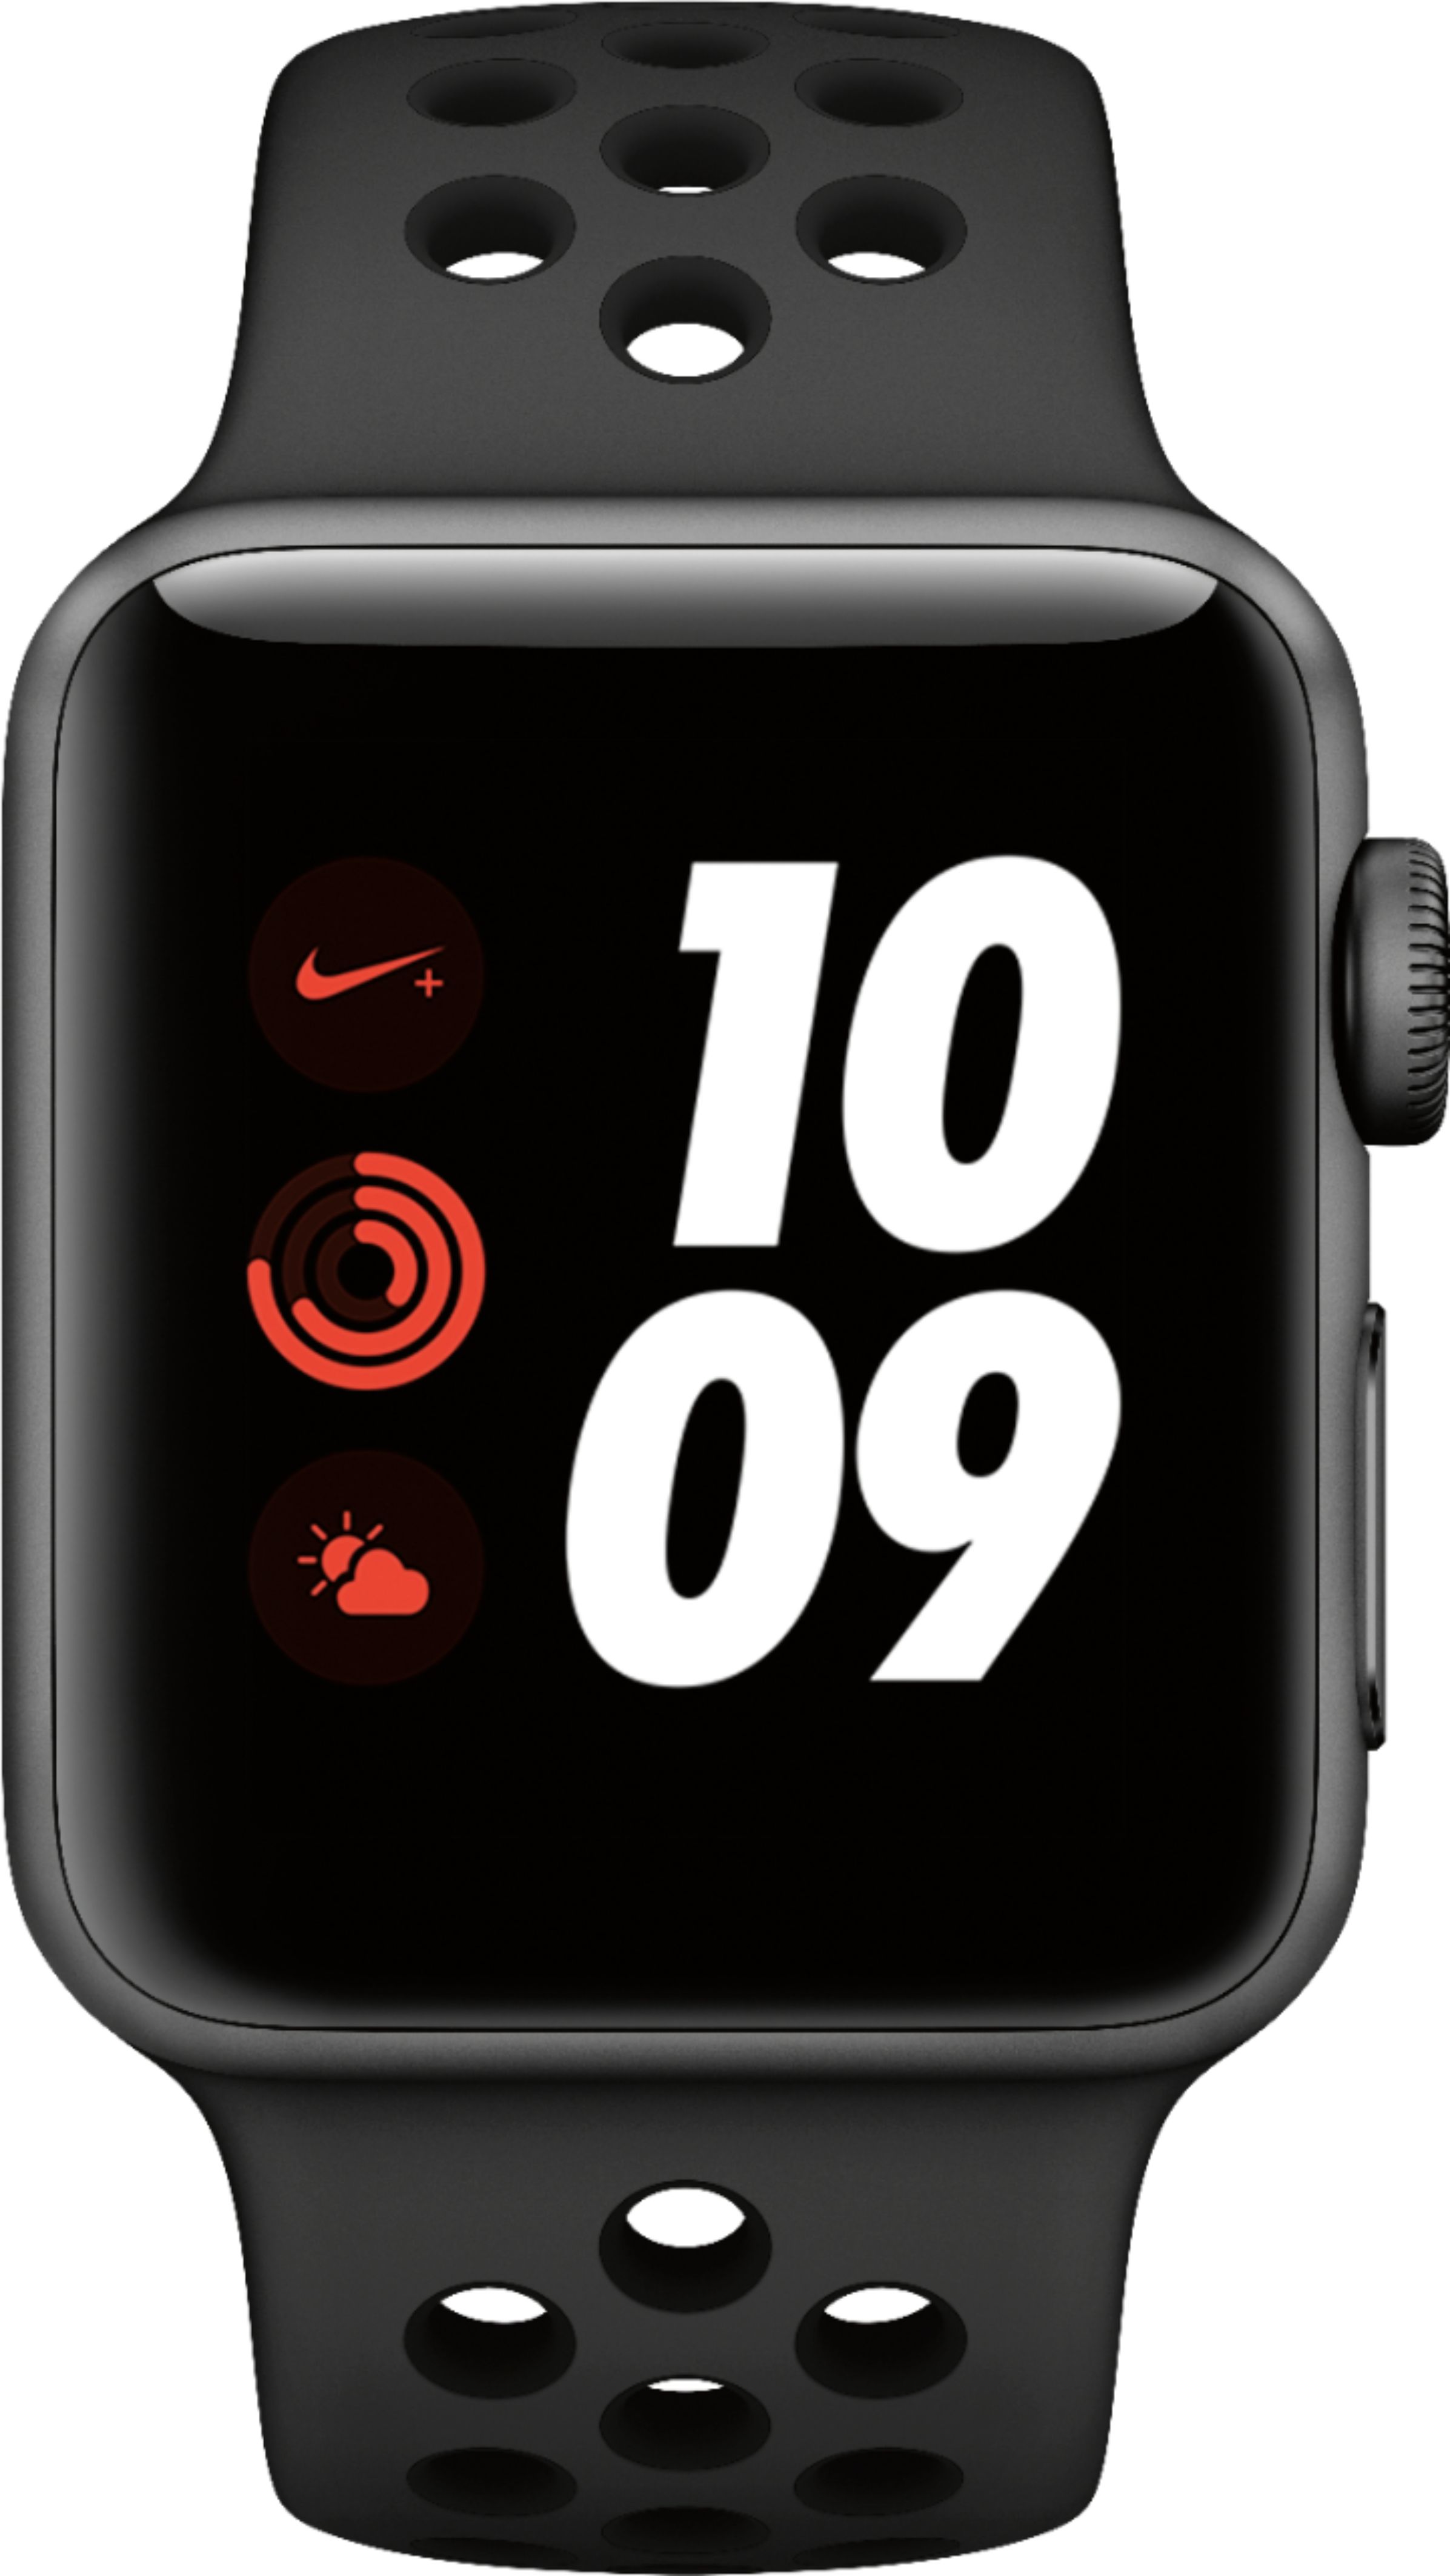 Apple Watch Nike+ Series 3 (GPS + Cellular) 38mm Aluminum Case